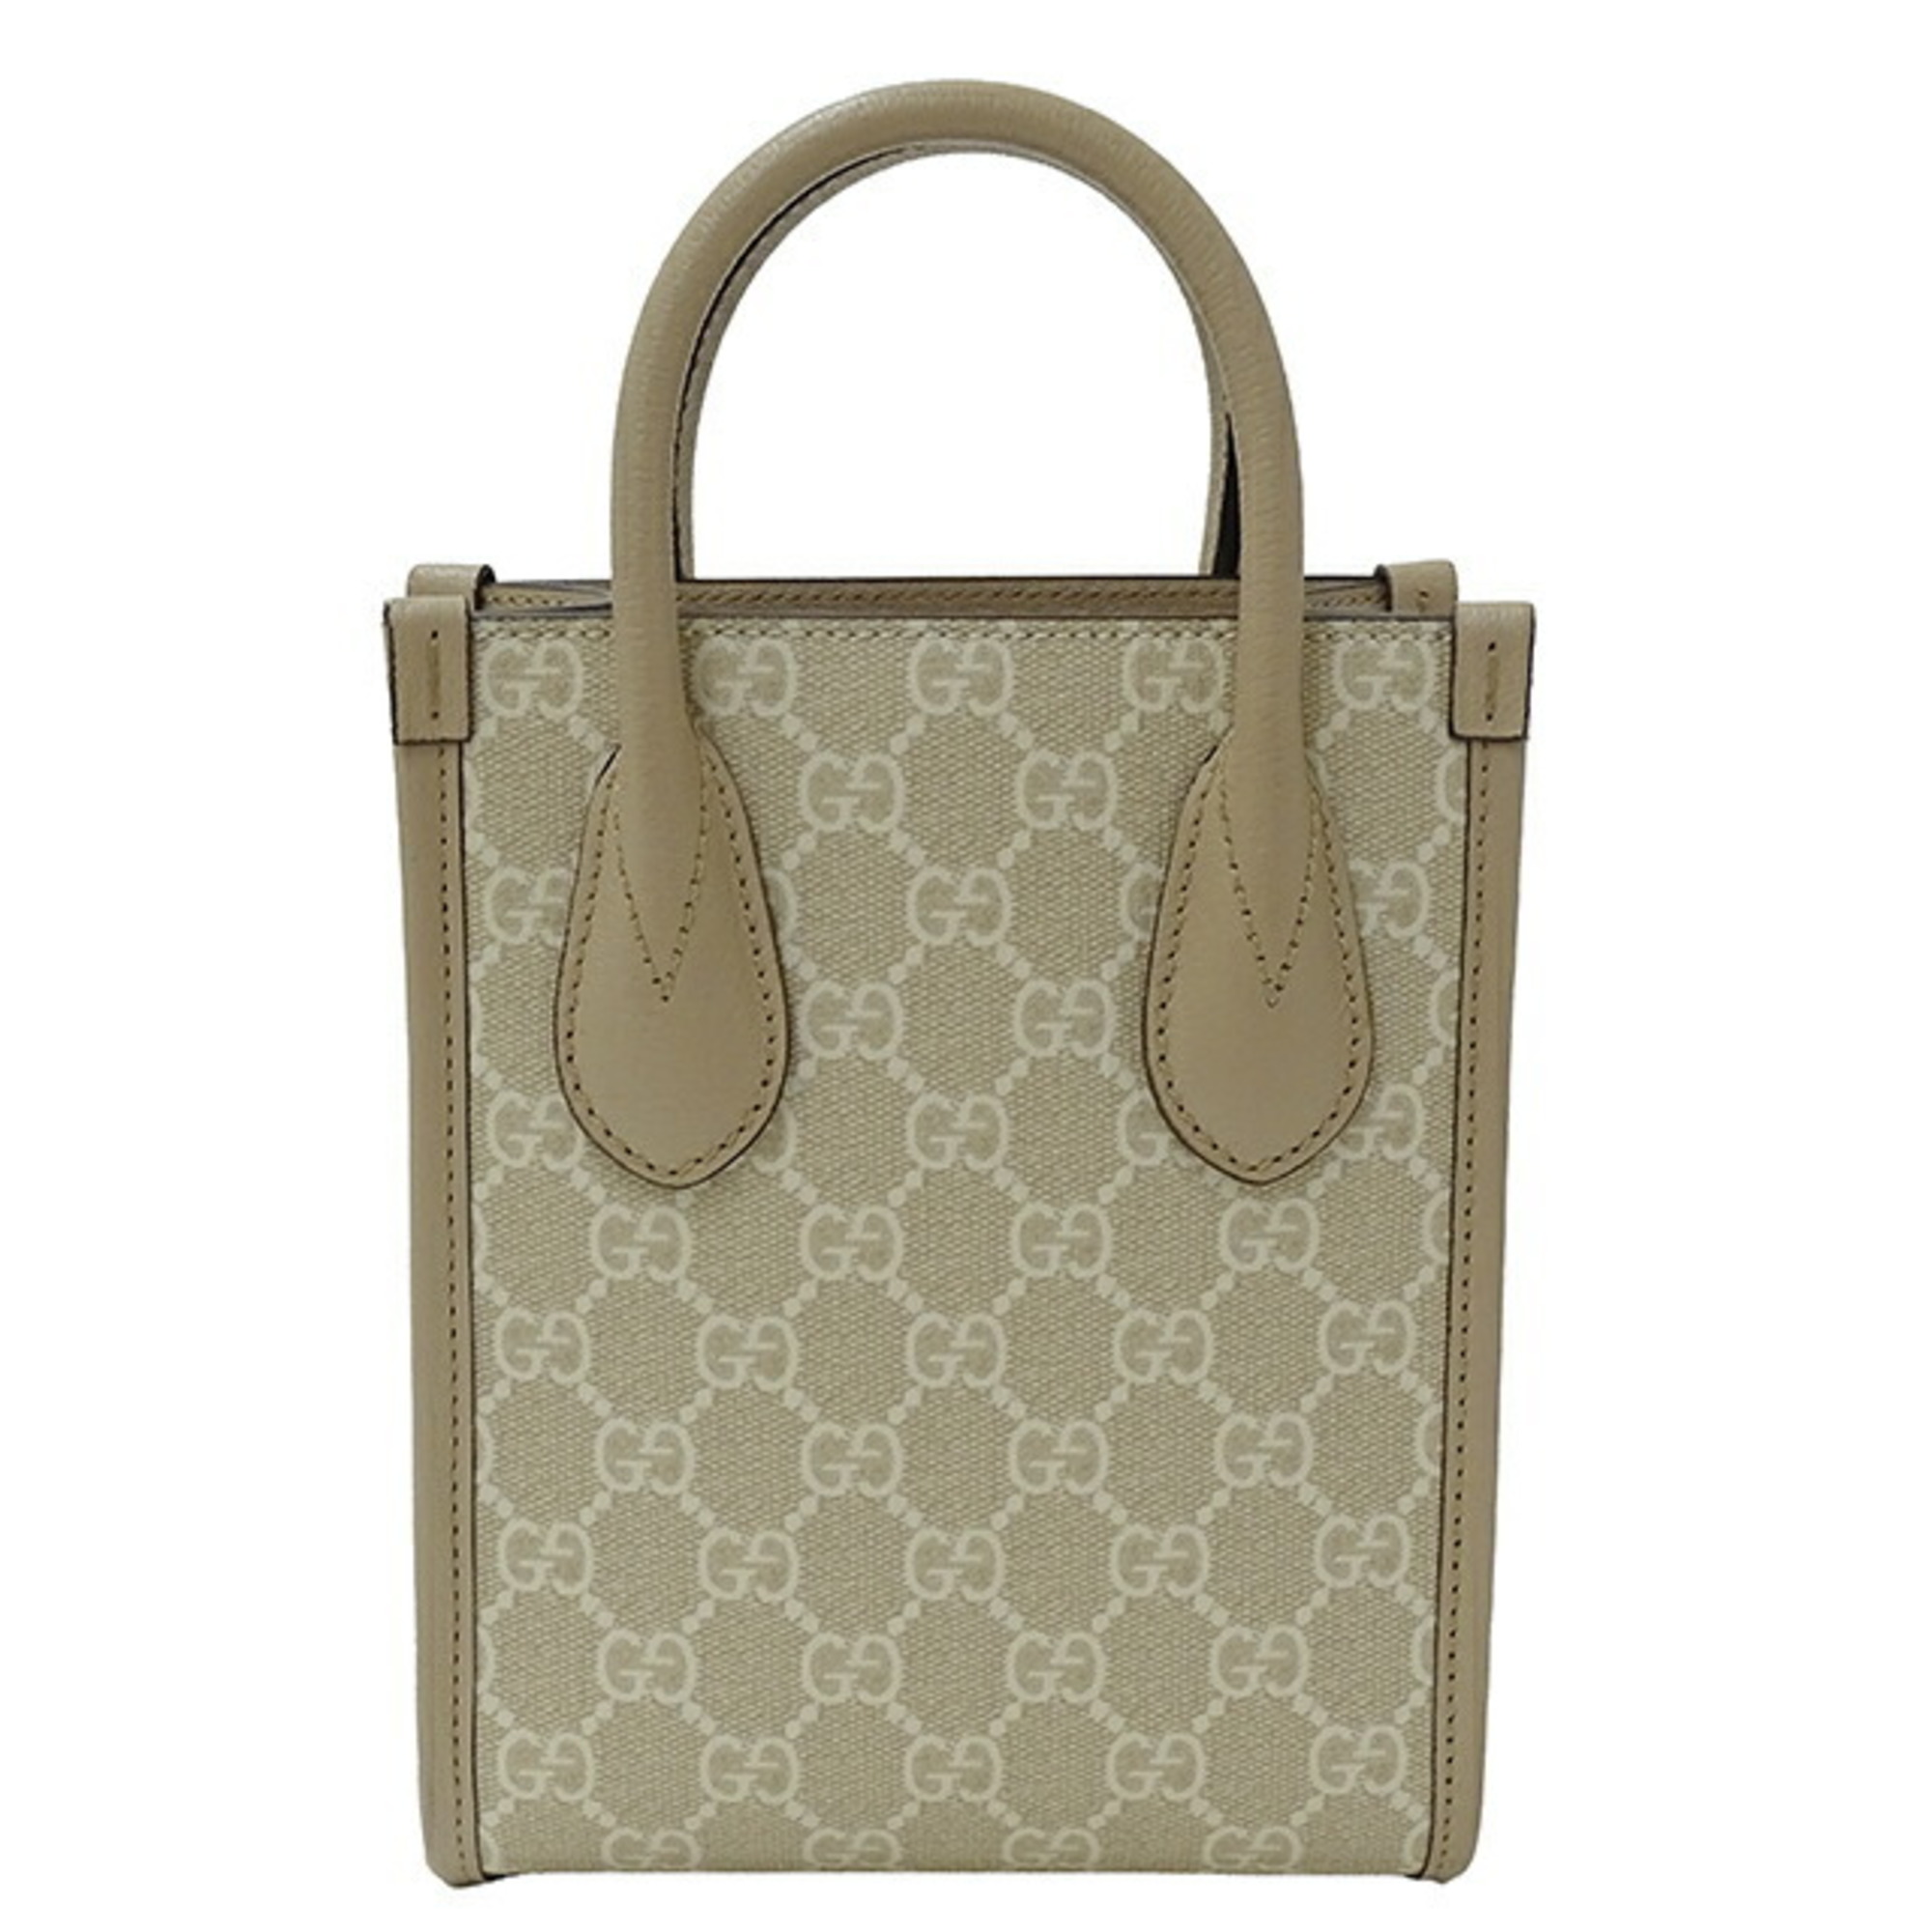 Gucci GUCCI Bag Women's Interlocking Handbag Shoulder 2way GG Supreme Beige Greige 671623 Compact